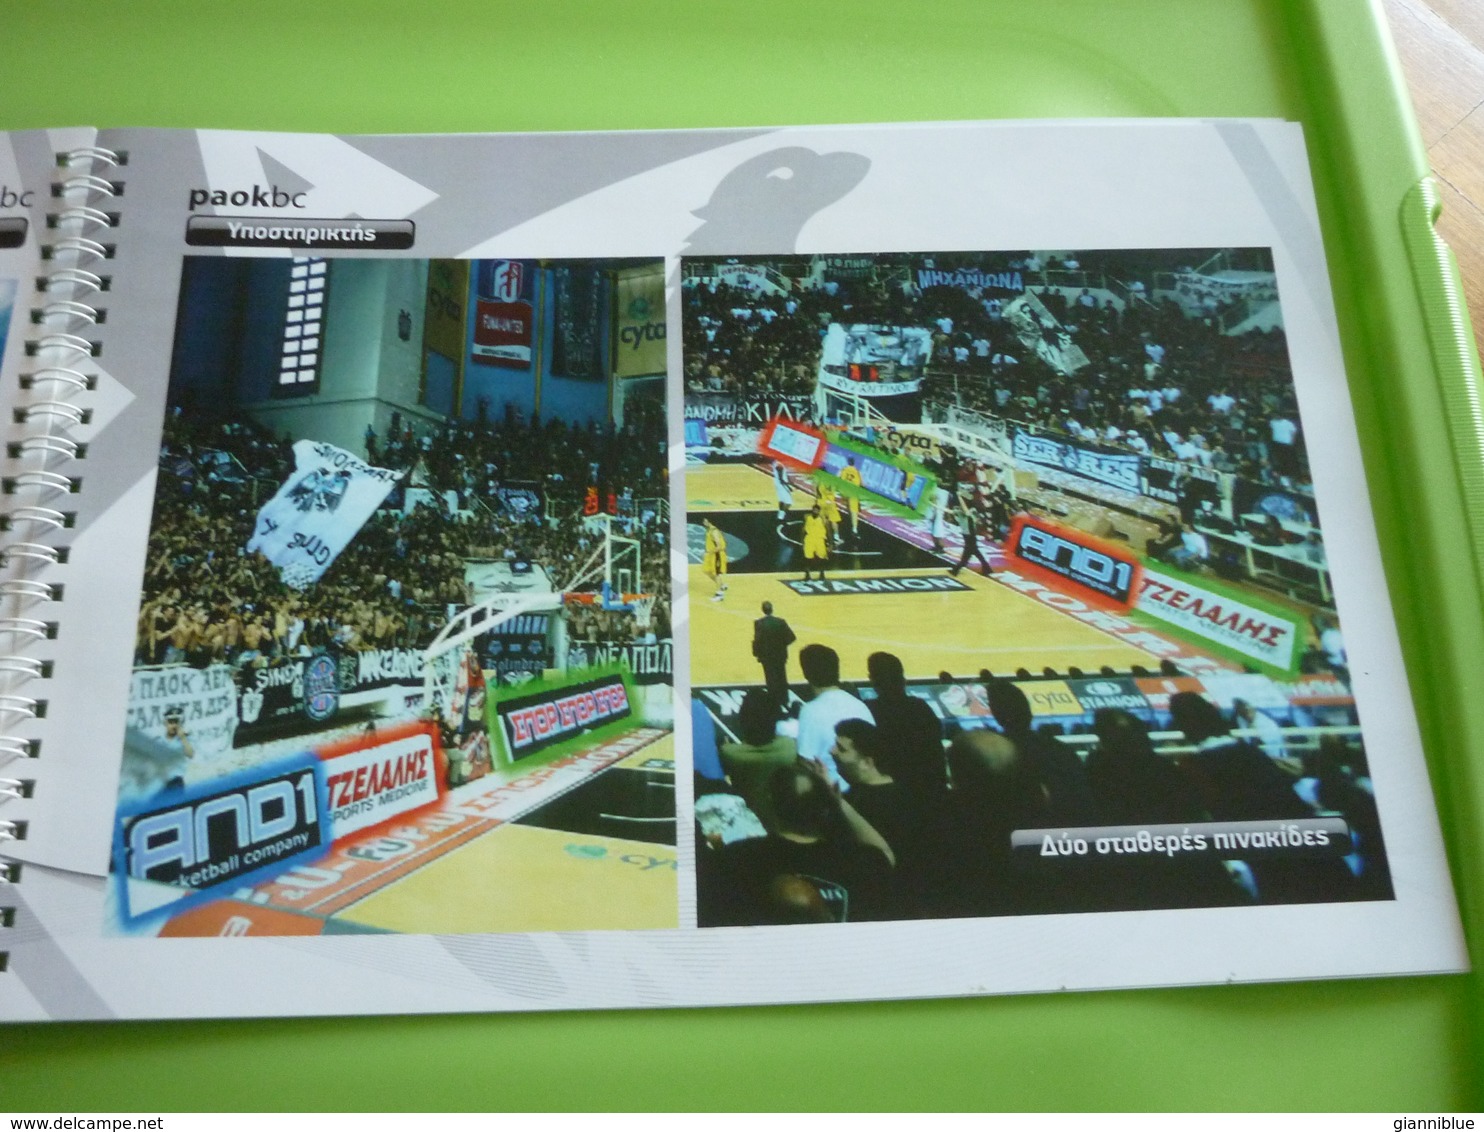 PAOK Thessaloniki basketball team hard cover sponsor book